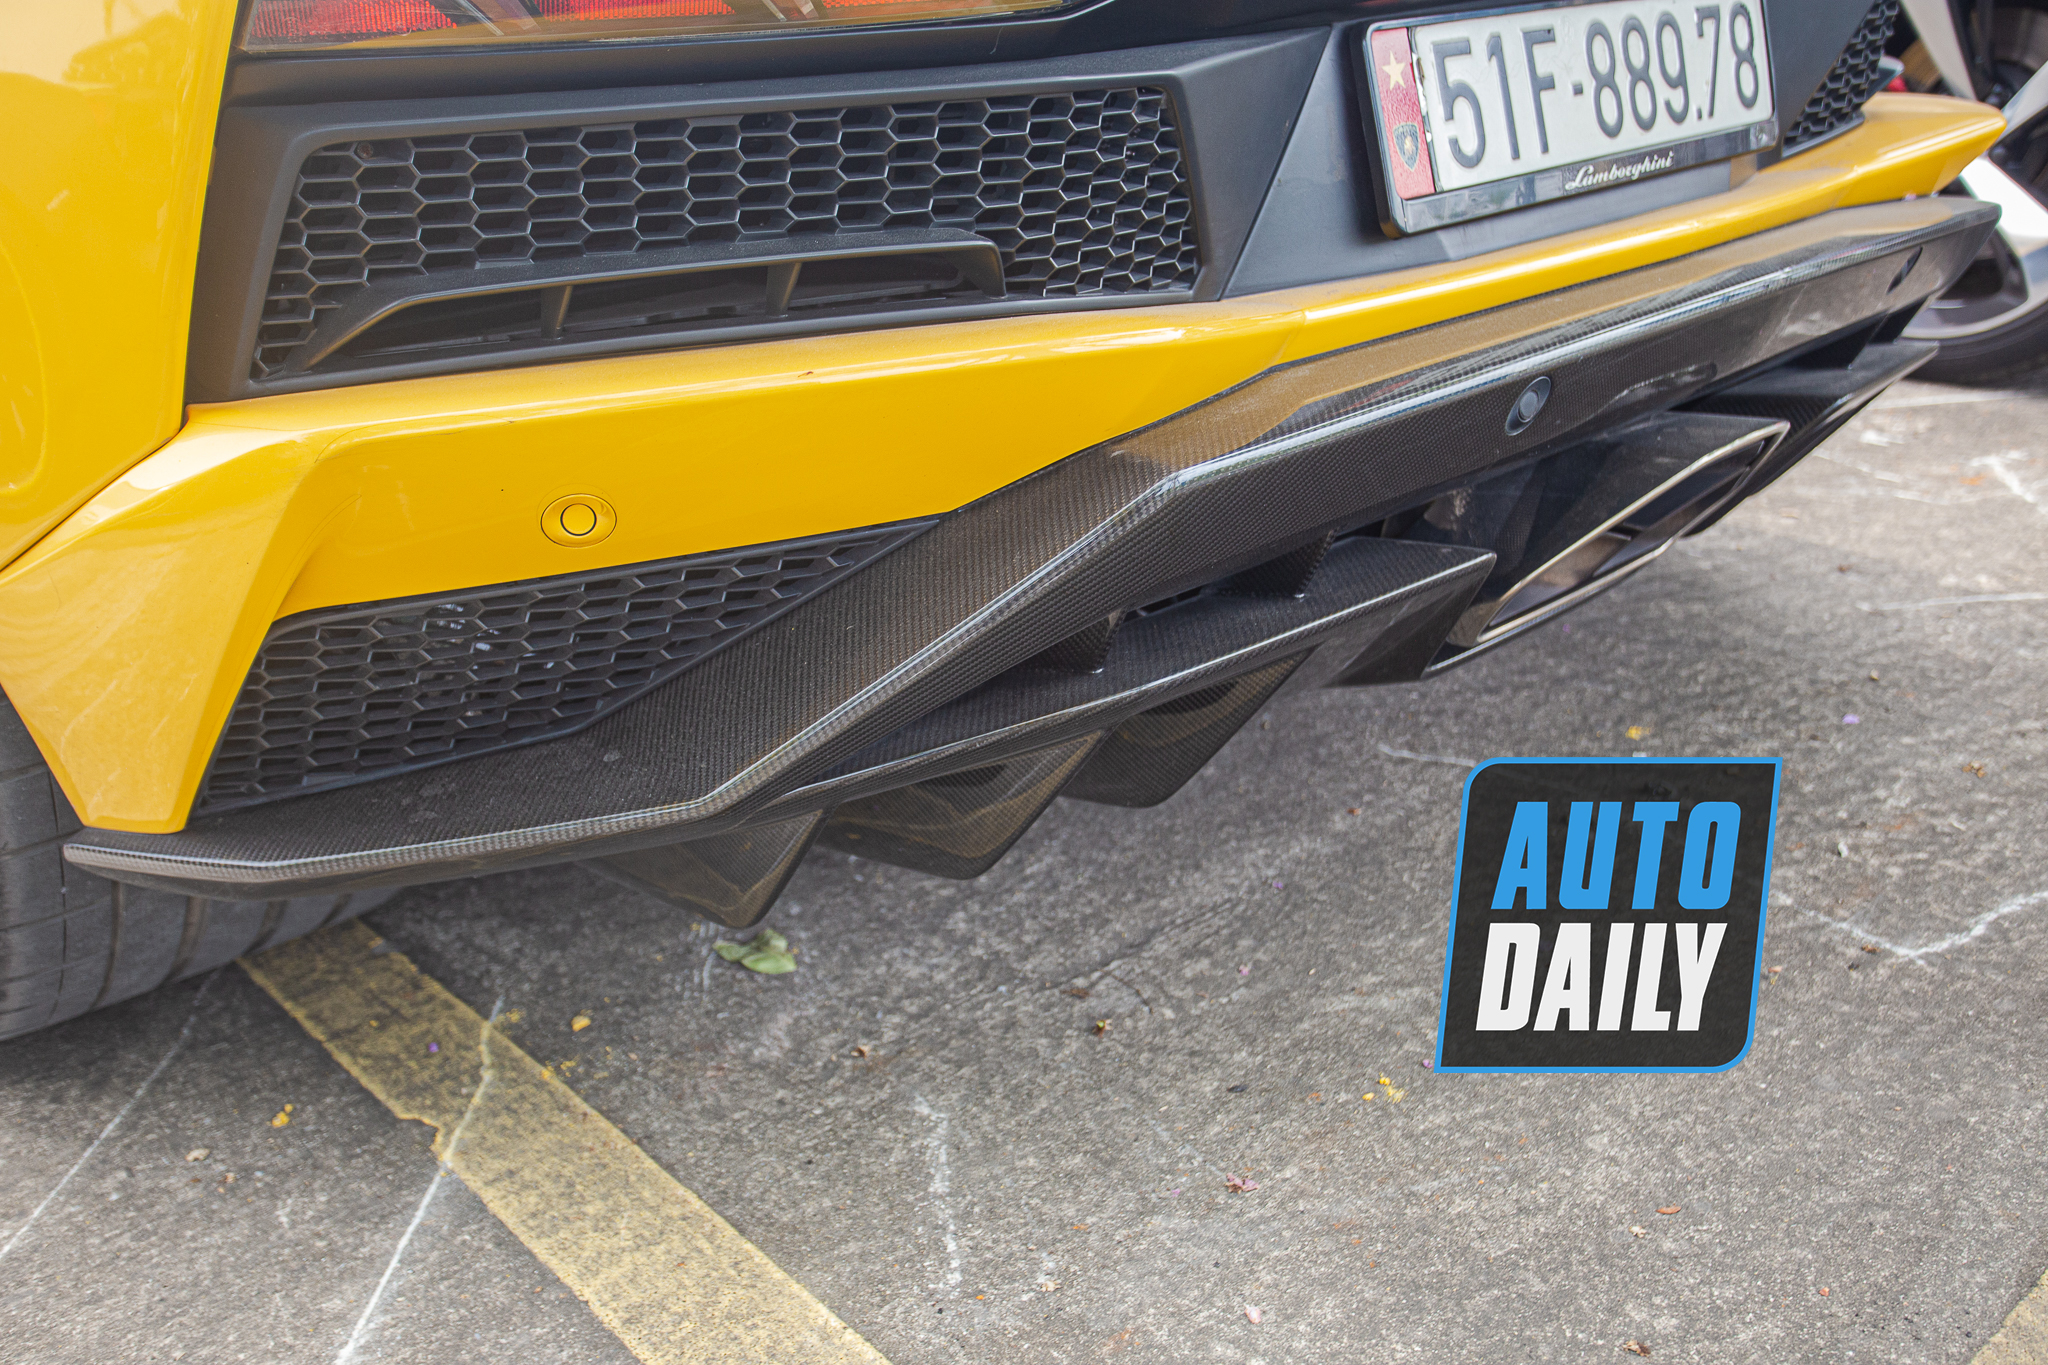 Chi tiết Lamborghini Aventador S độ khủng giá 45 tỷ lamborghini-aventador-s-45-ty-do-khung-autodaily-10.JPG